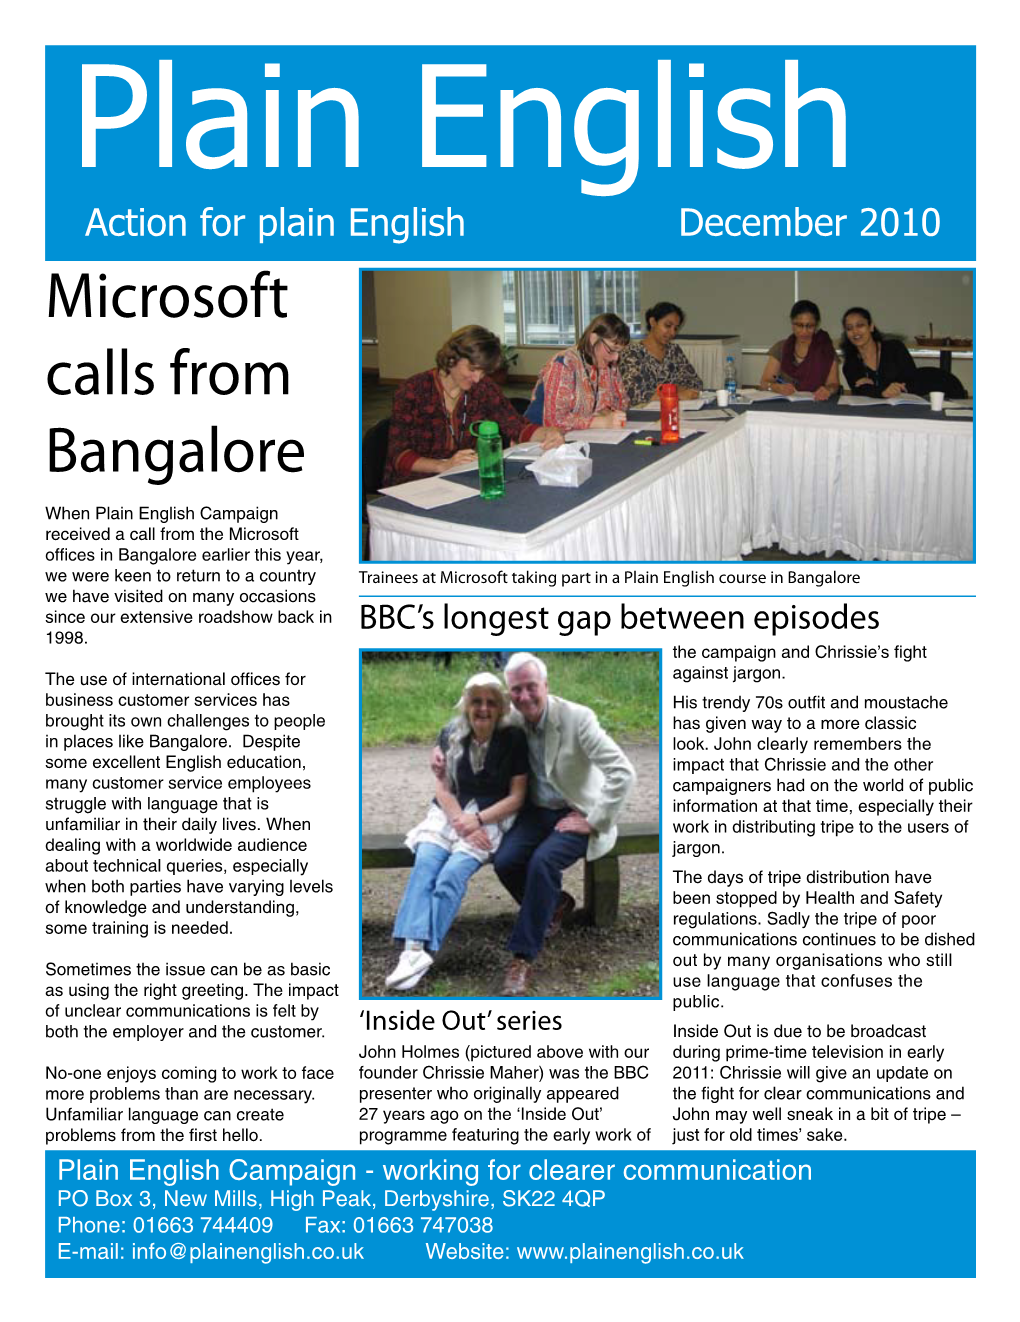 Microsoft Calls from Bangalore